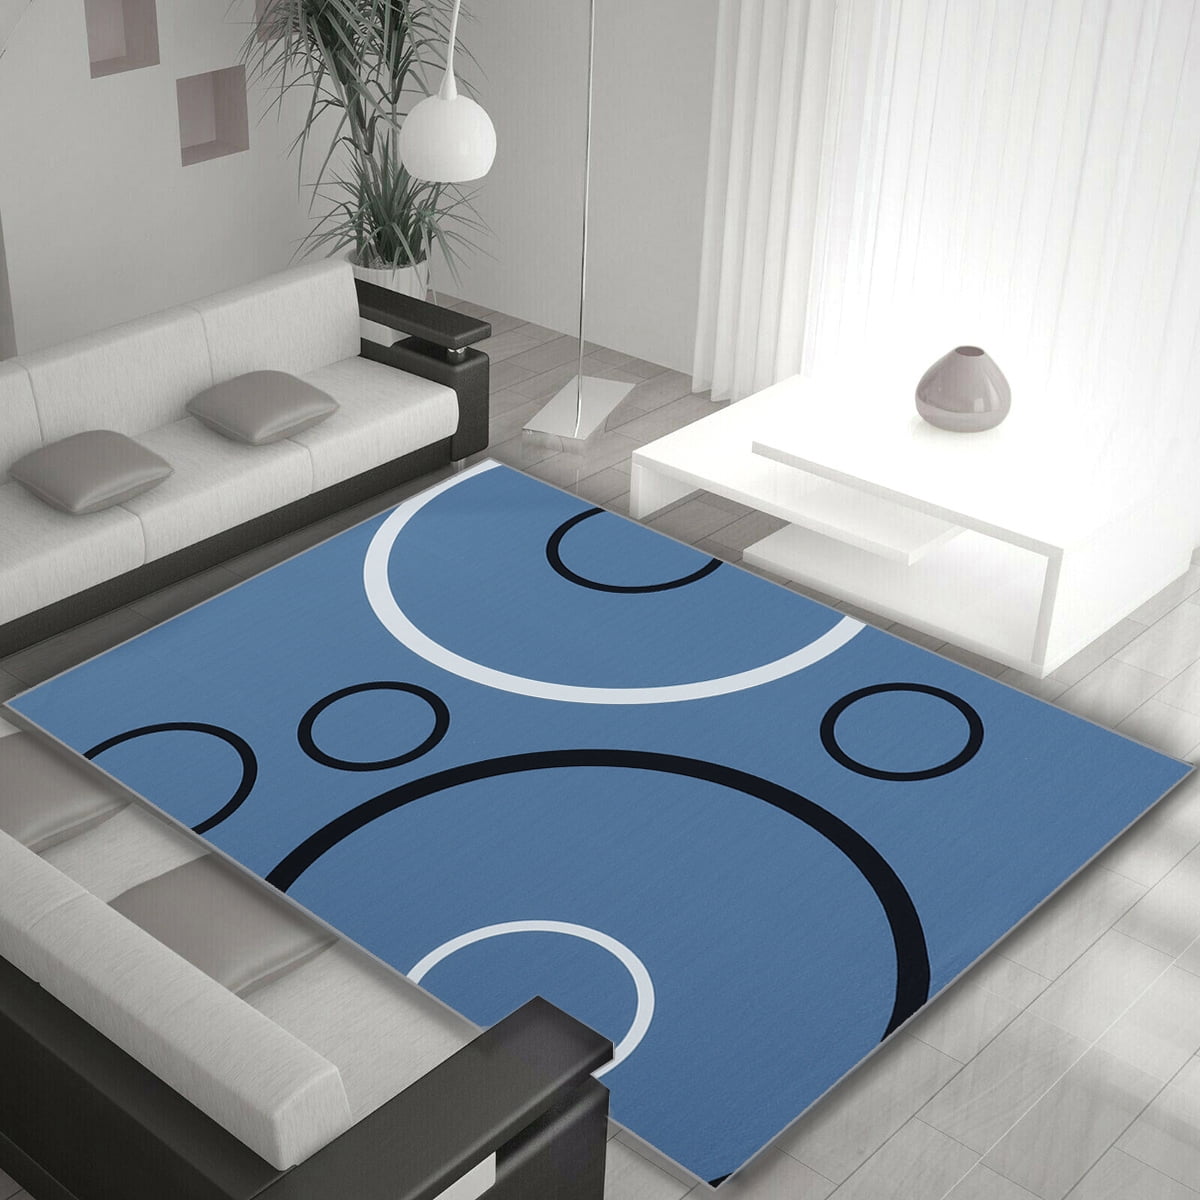 Modern Area Rugs Large Small Carpets Runner Floor Mats Living Room Bedroom 